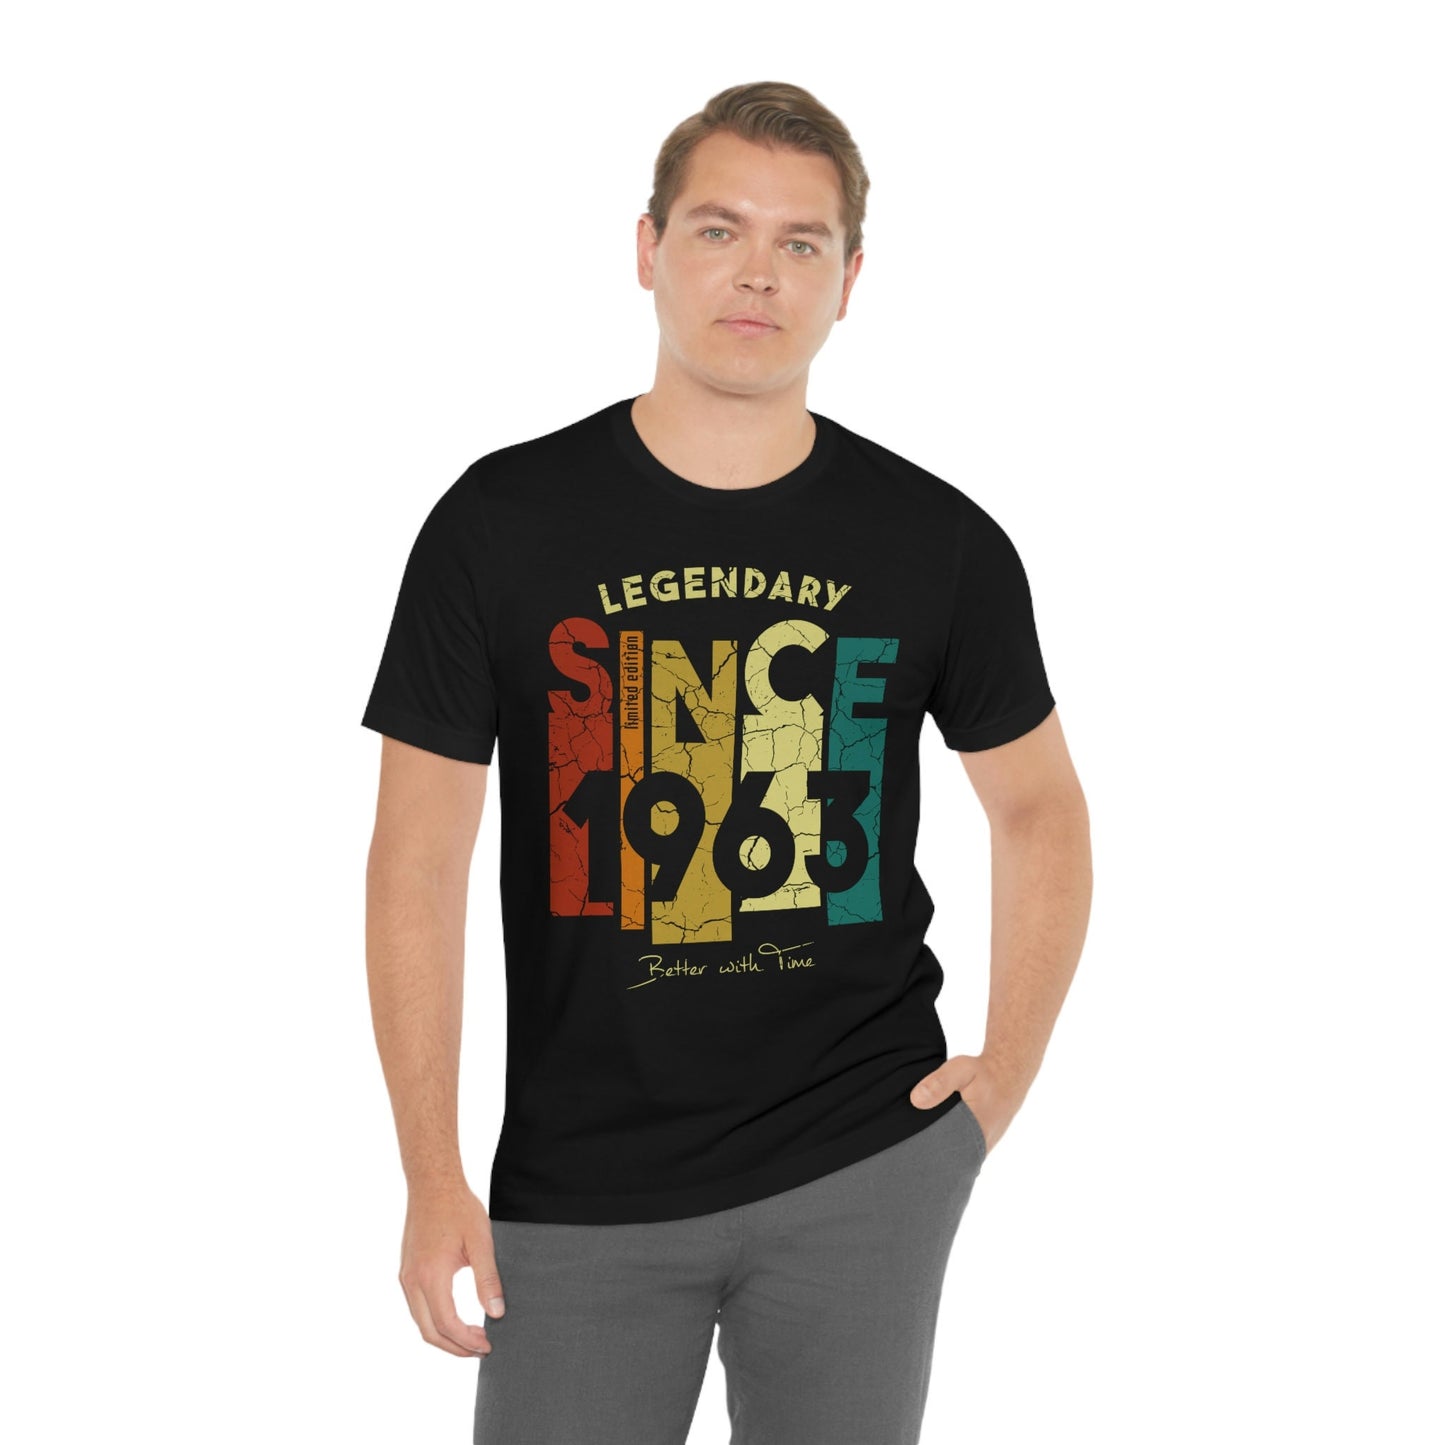 Legendary since 1963 birthday shirt for women or men, Gift shirt for wife or husband